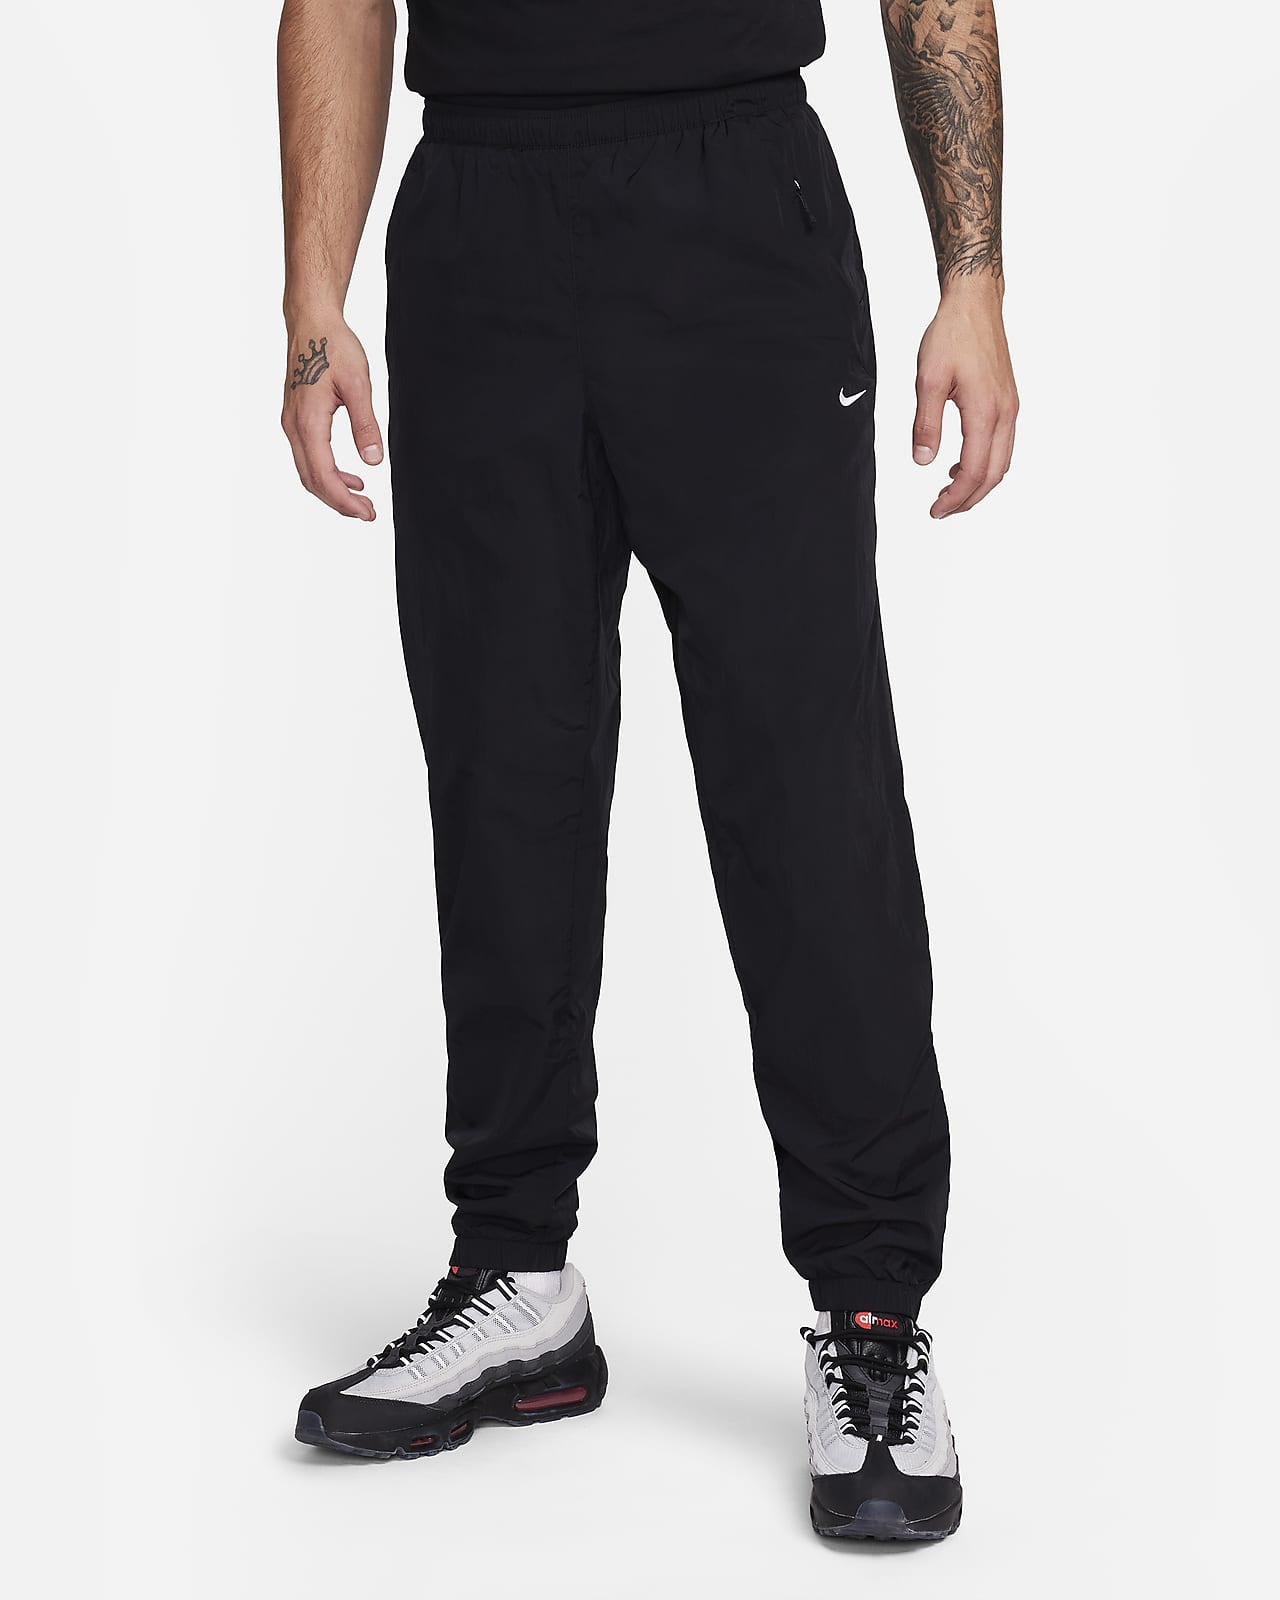 Nike Culture of Football Men's Therma-FIT Repel Soccer Pants